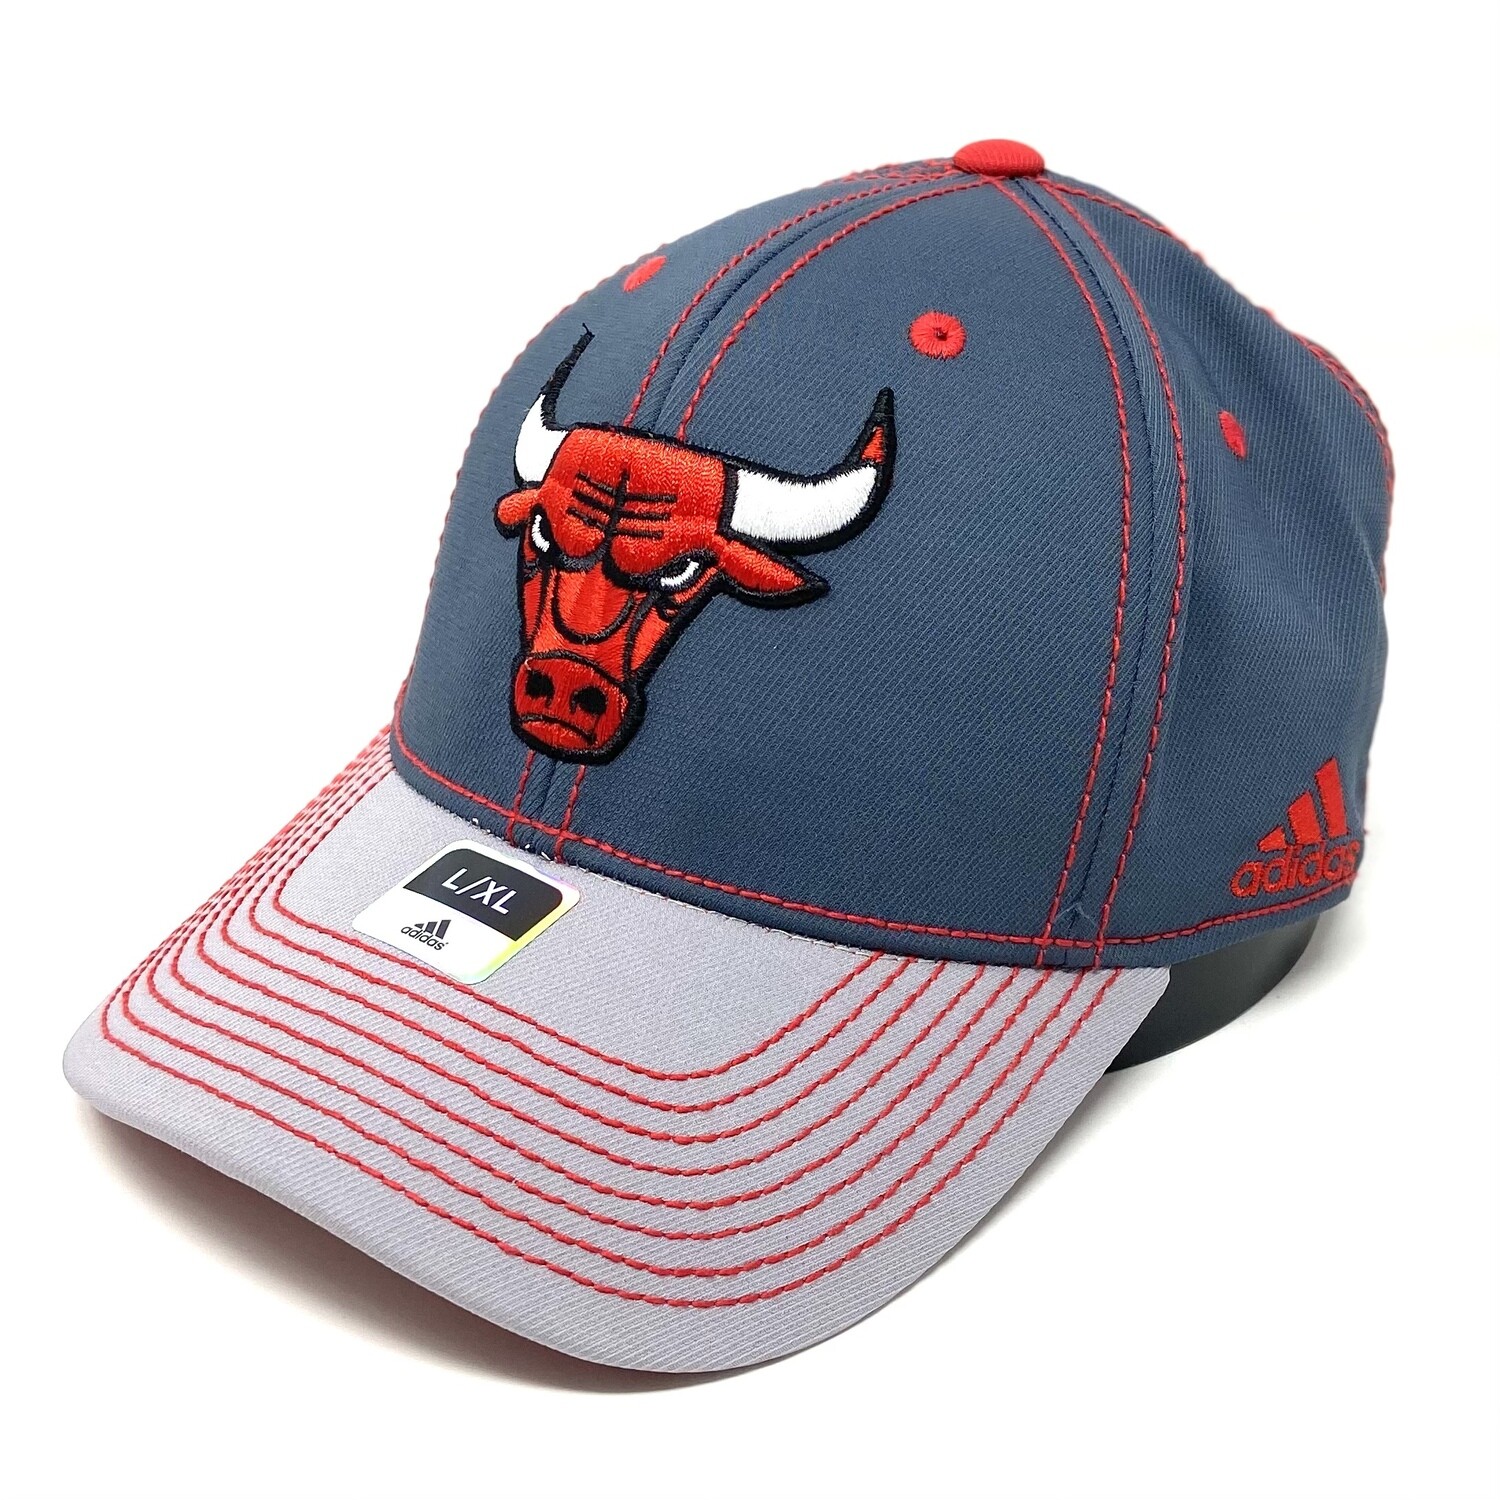 Adidas Chicago Bulls Hats for Men